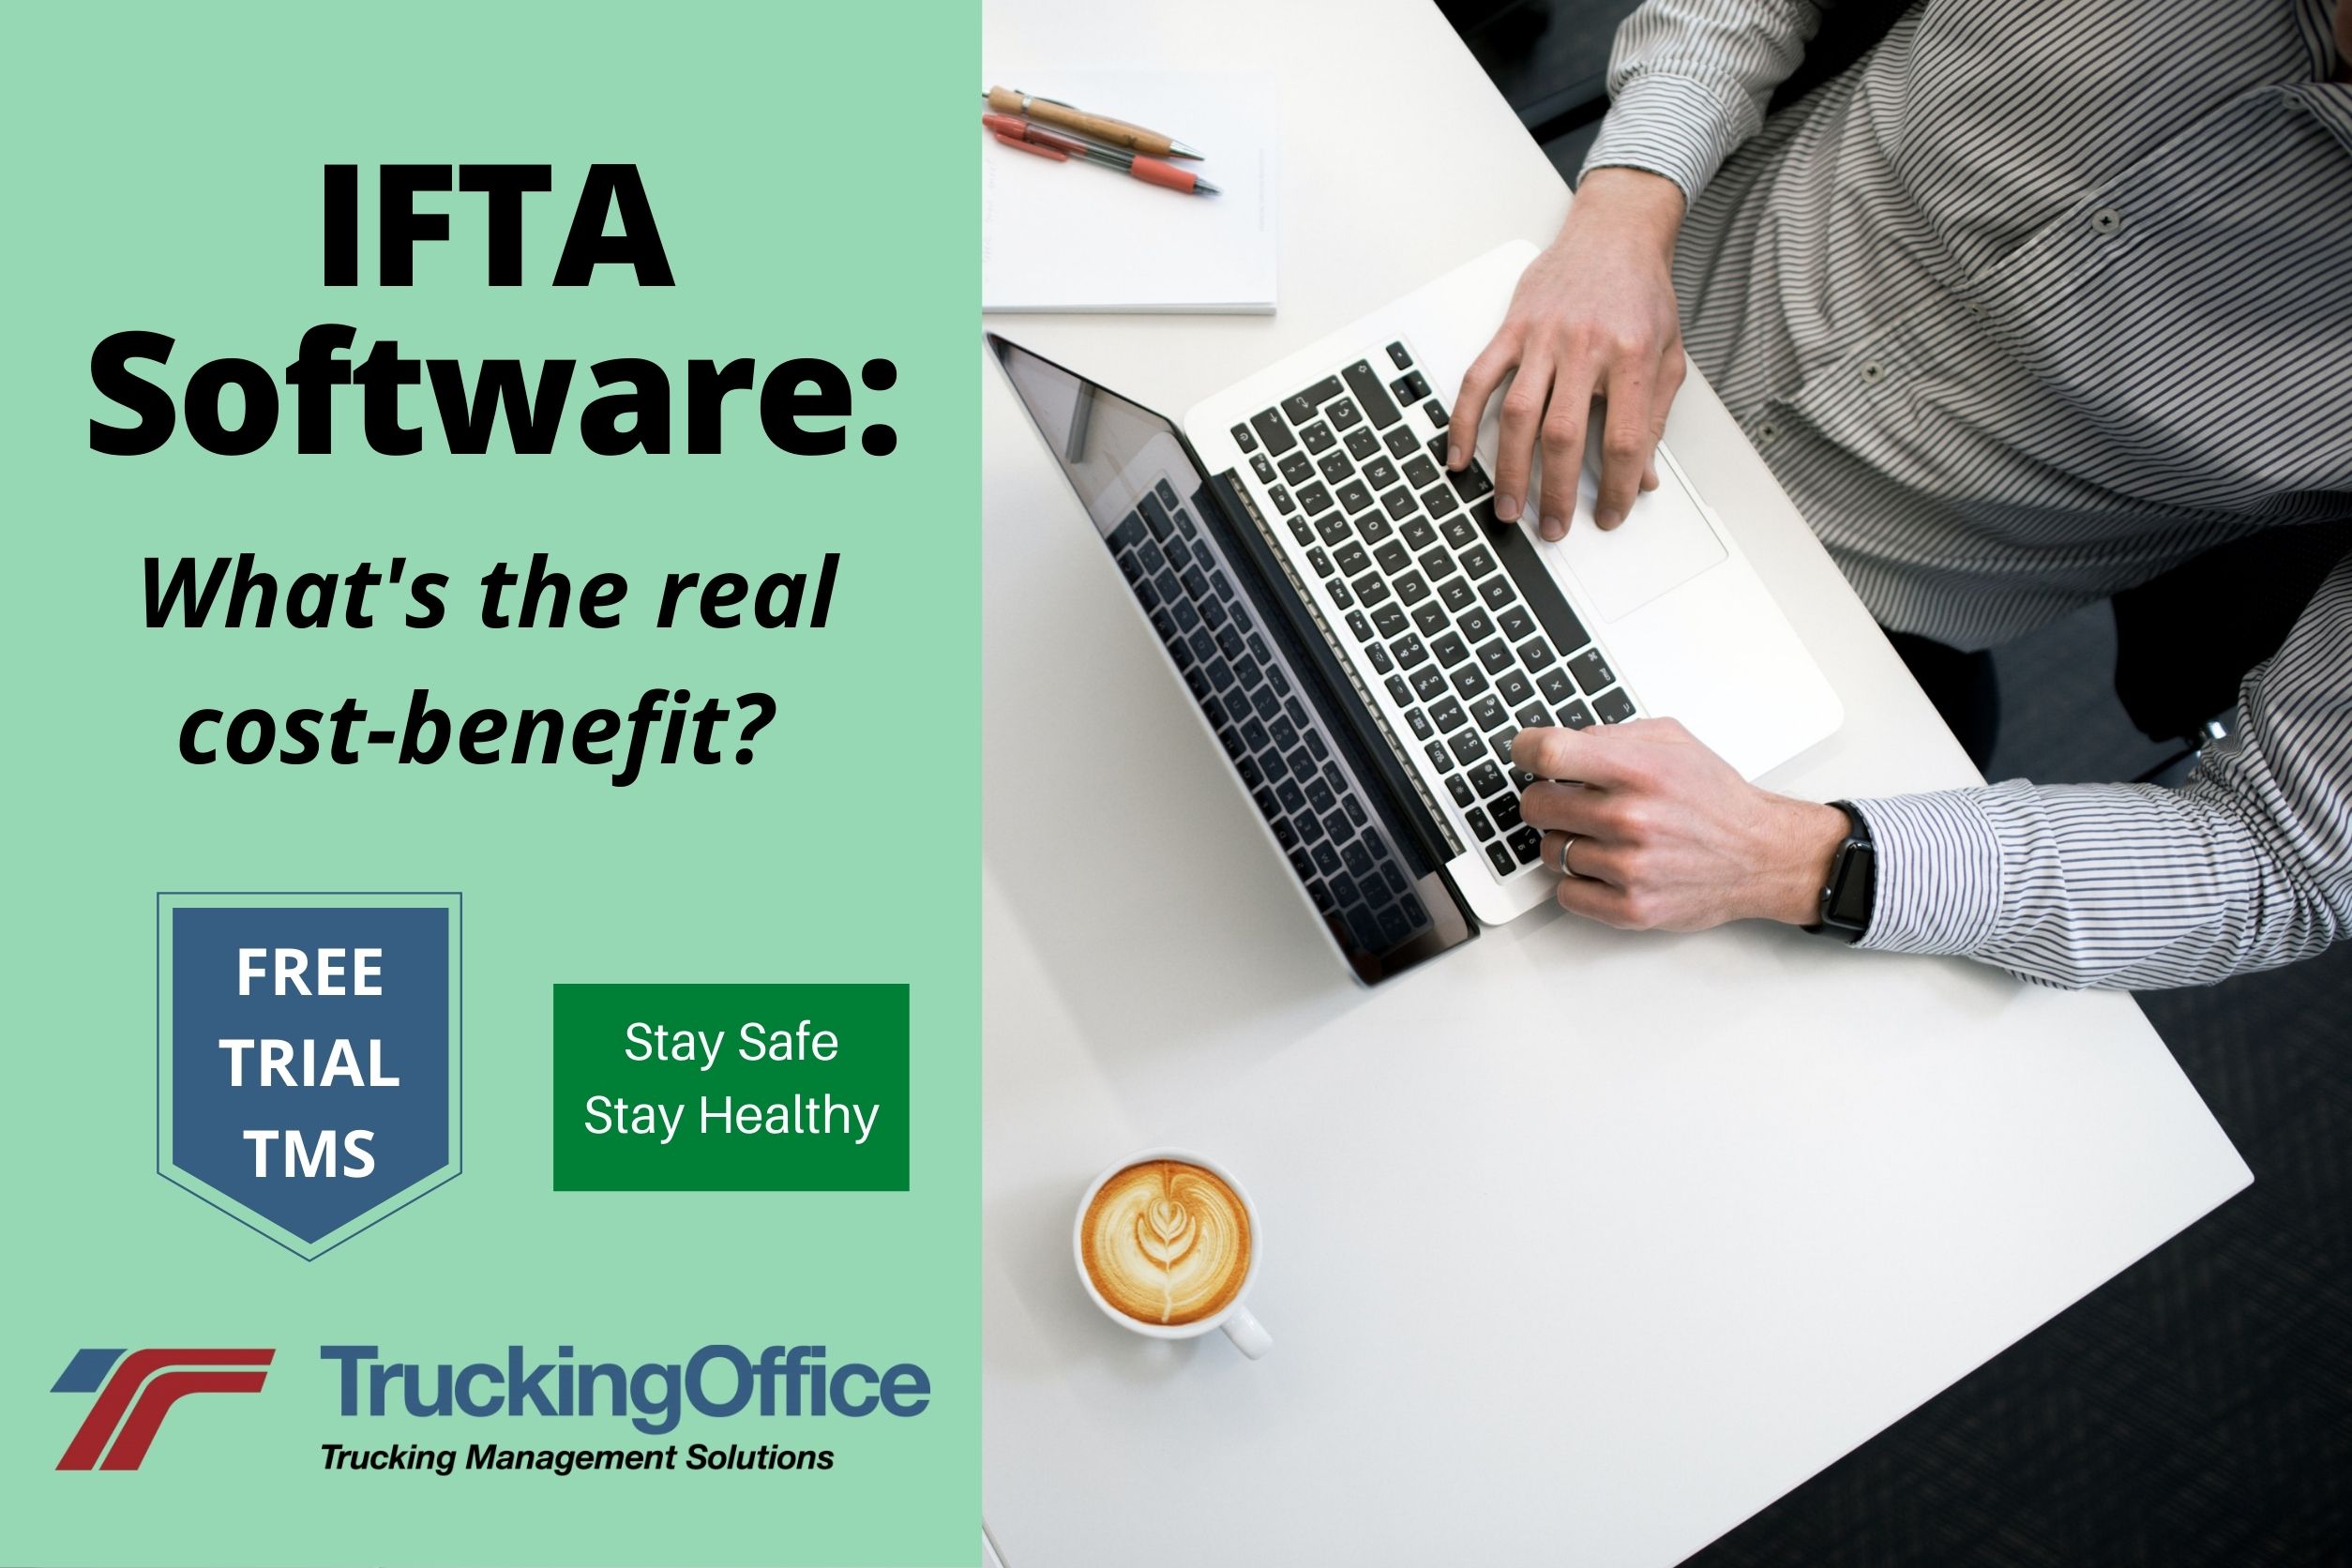 Free IFTA filing software?  Don’t think so.